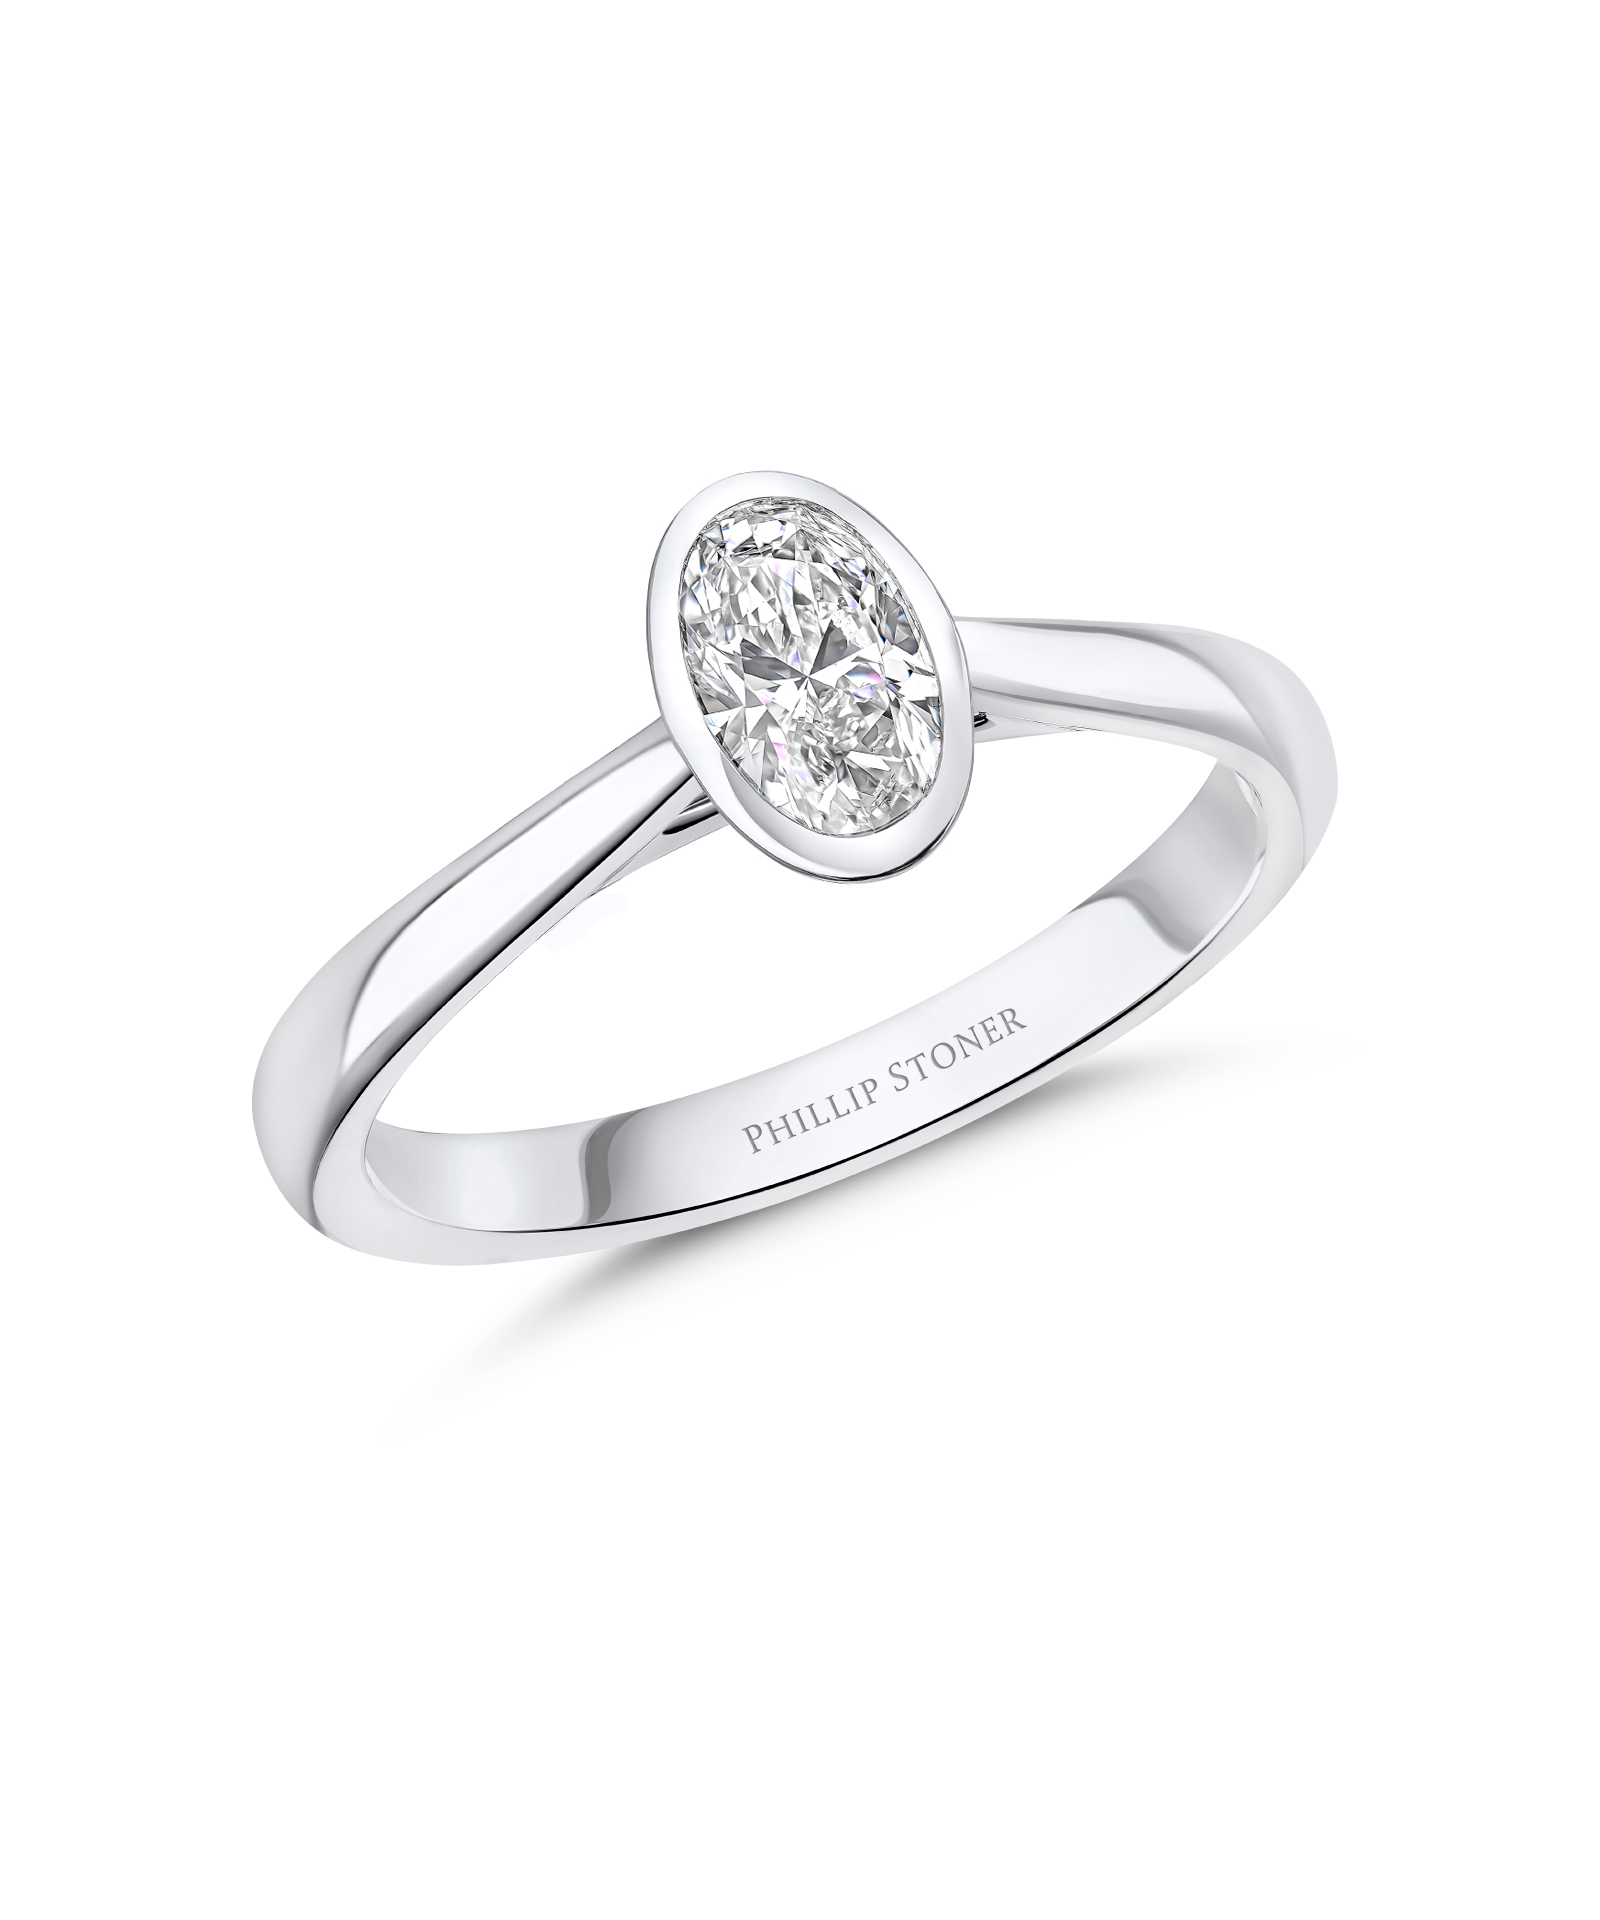 0.50ct Oval Cut Diamond Rubover Engagement Ring - Phillip Stoner The Jeweller